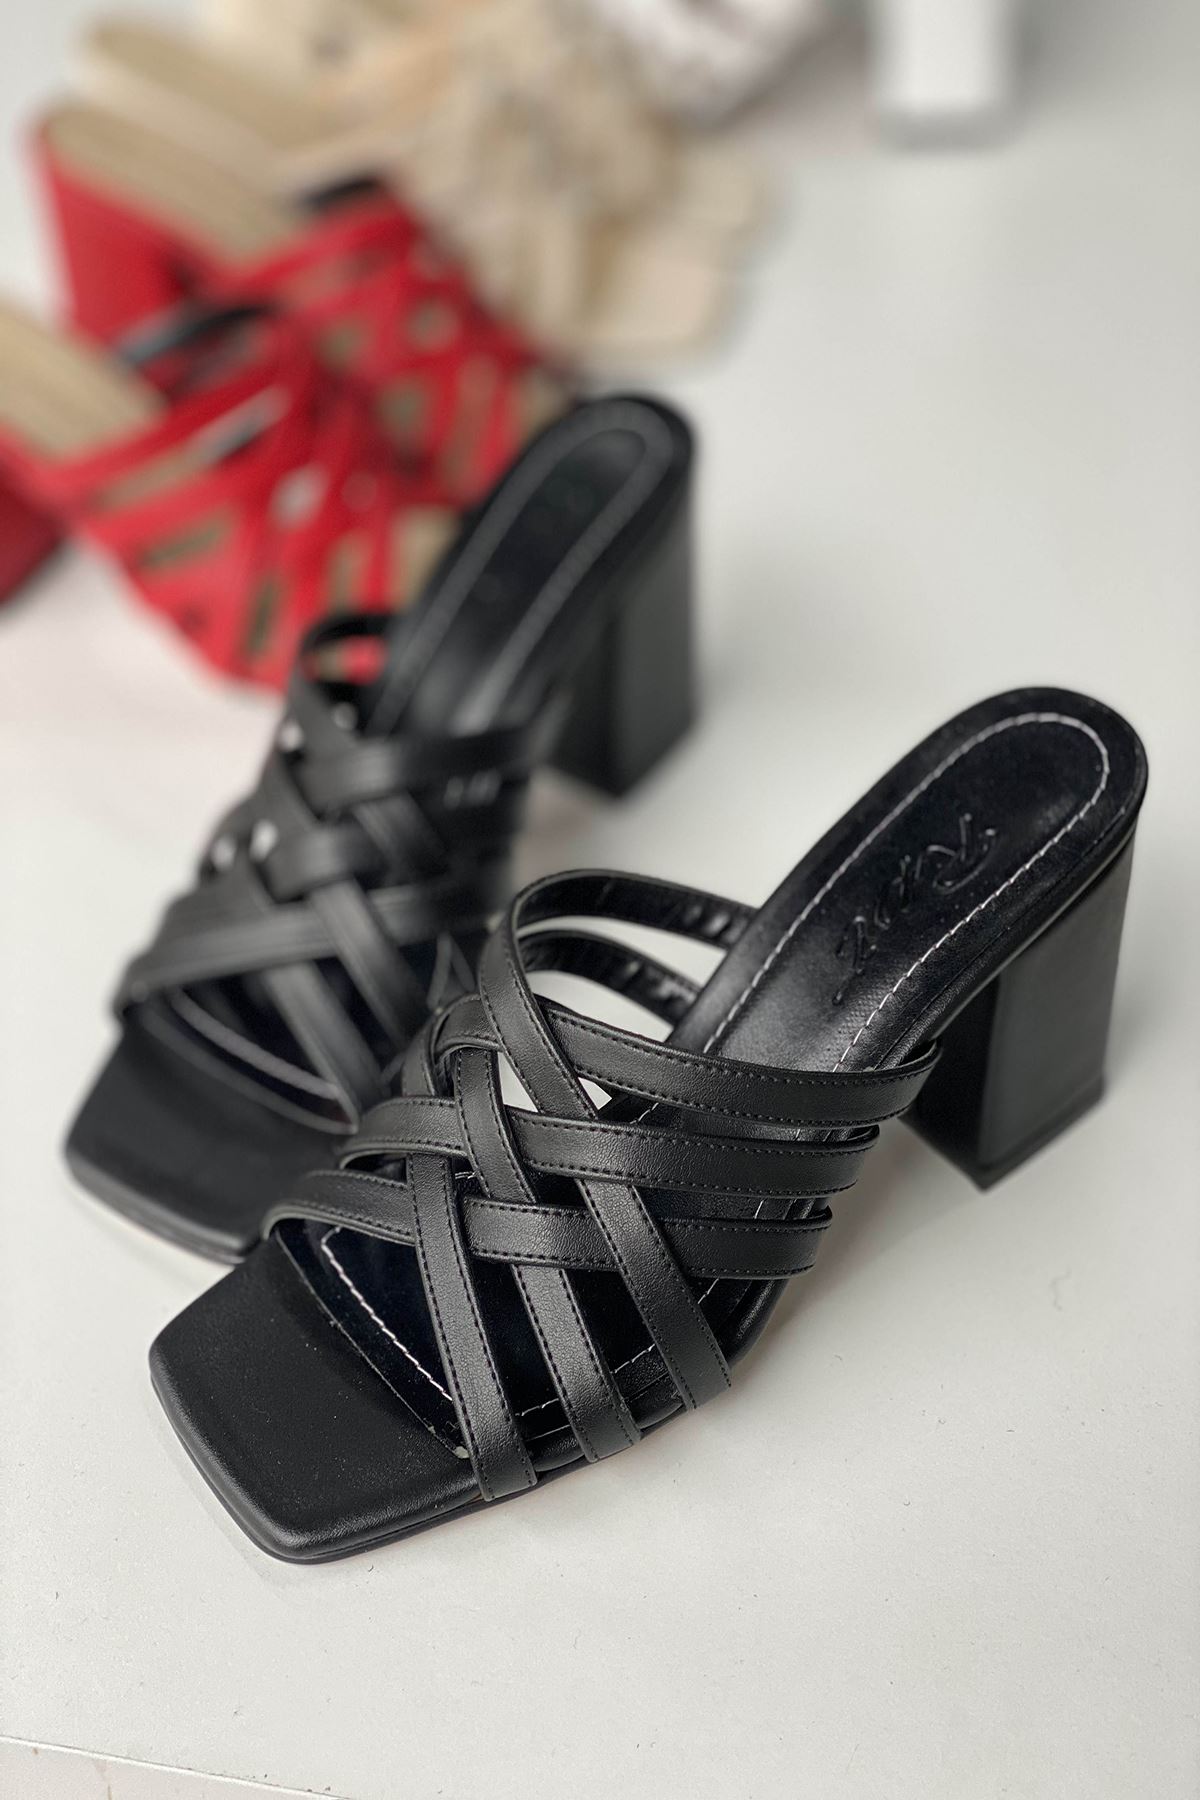 Y926 Siyah Deri Topuklu Ayakkabı